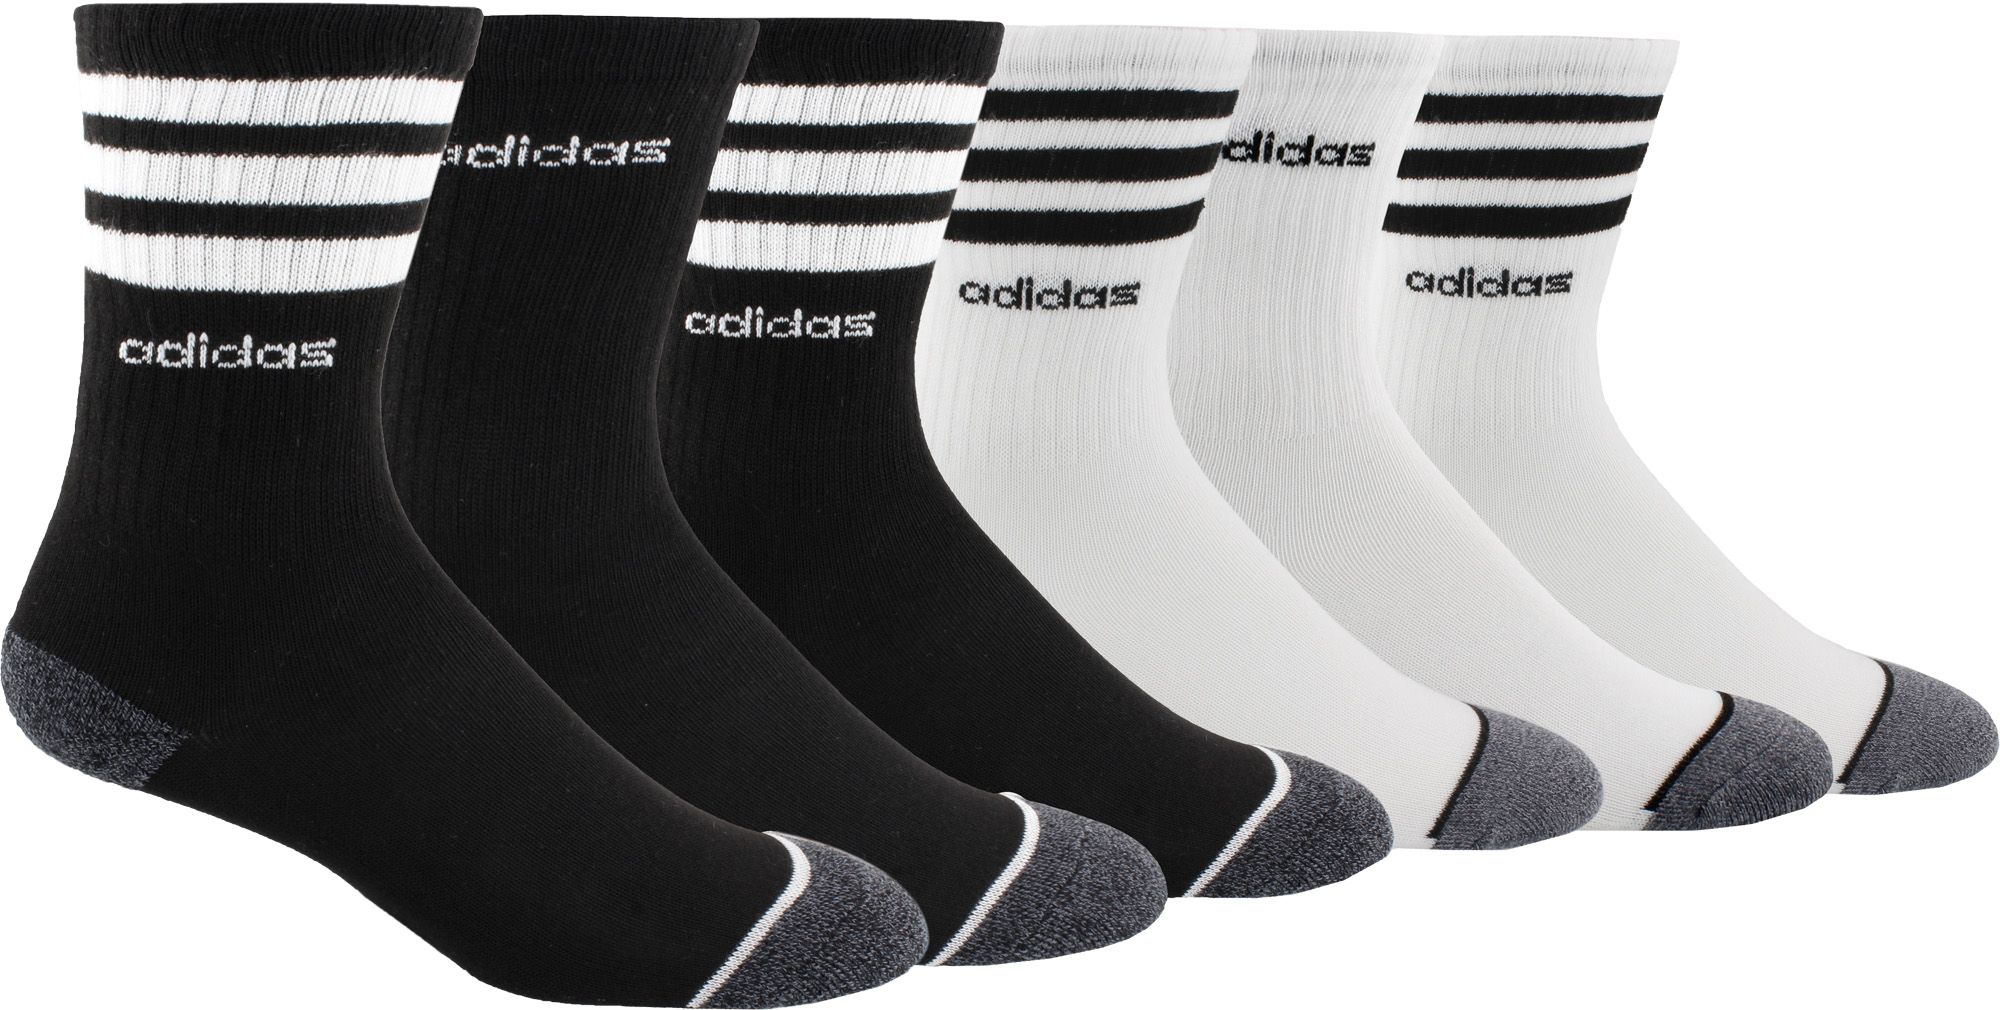 adidas Youth 3-Stripes Crew Socks - 6 